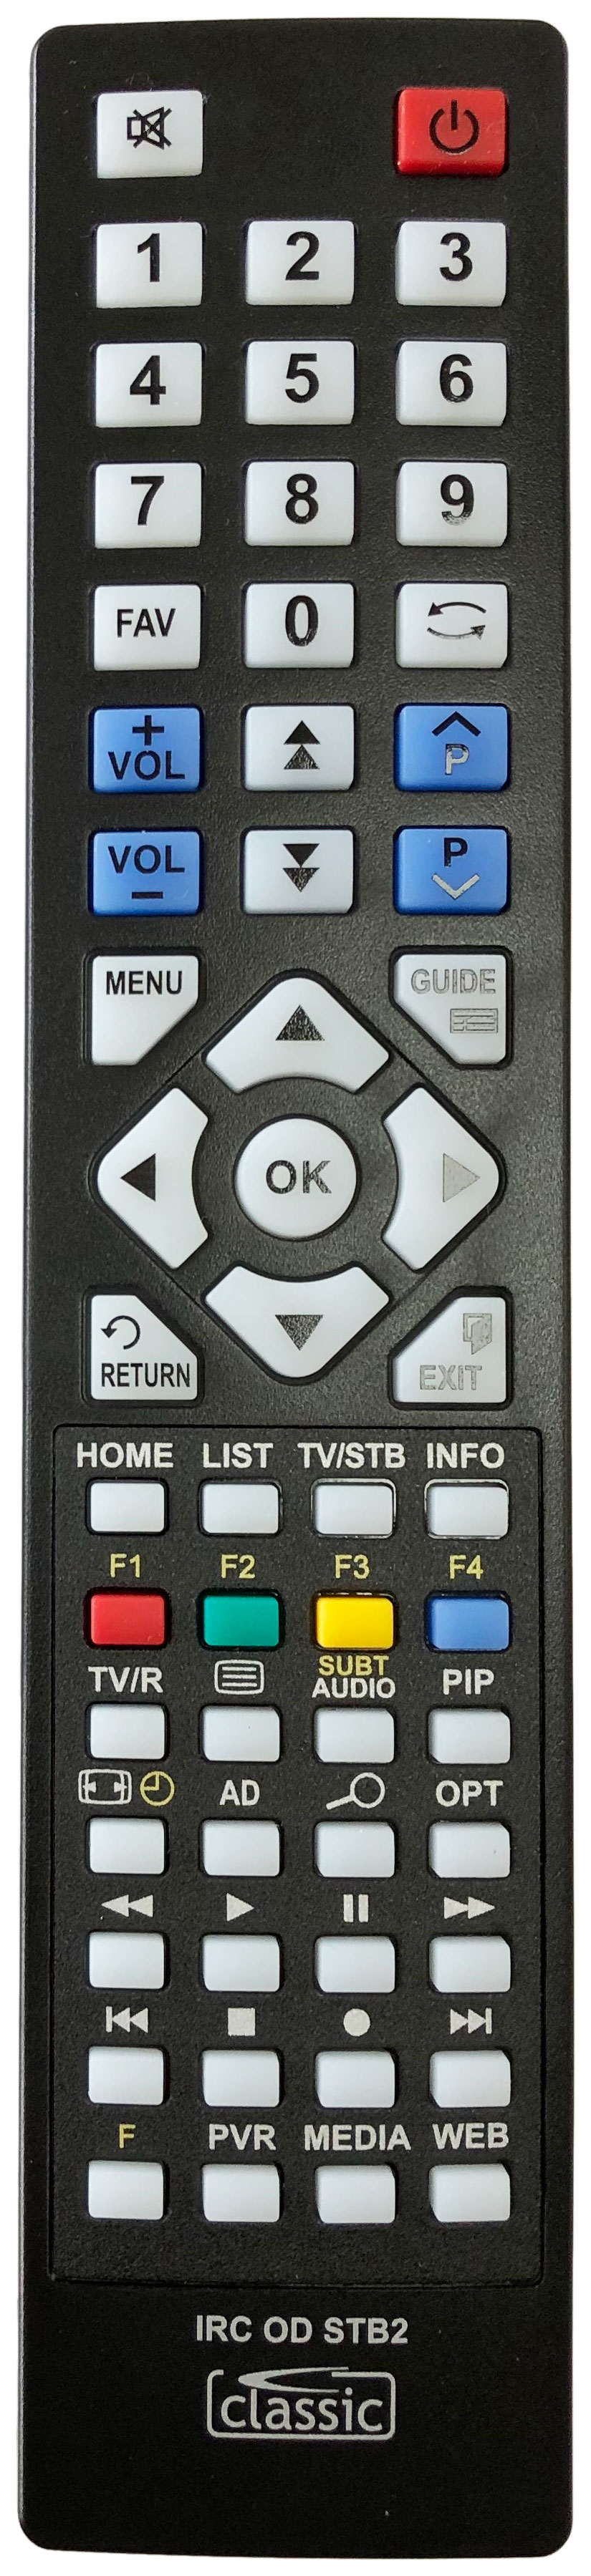 MANHATTAN PLAZA HDR-S500 Remote Control